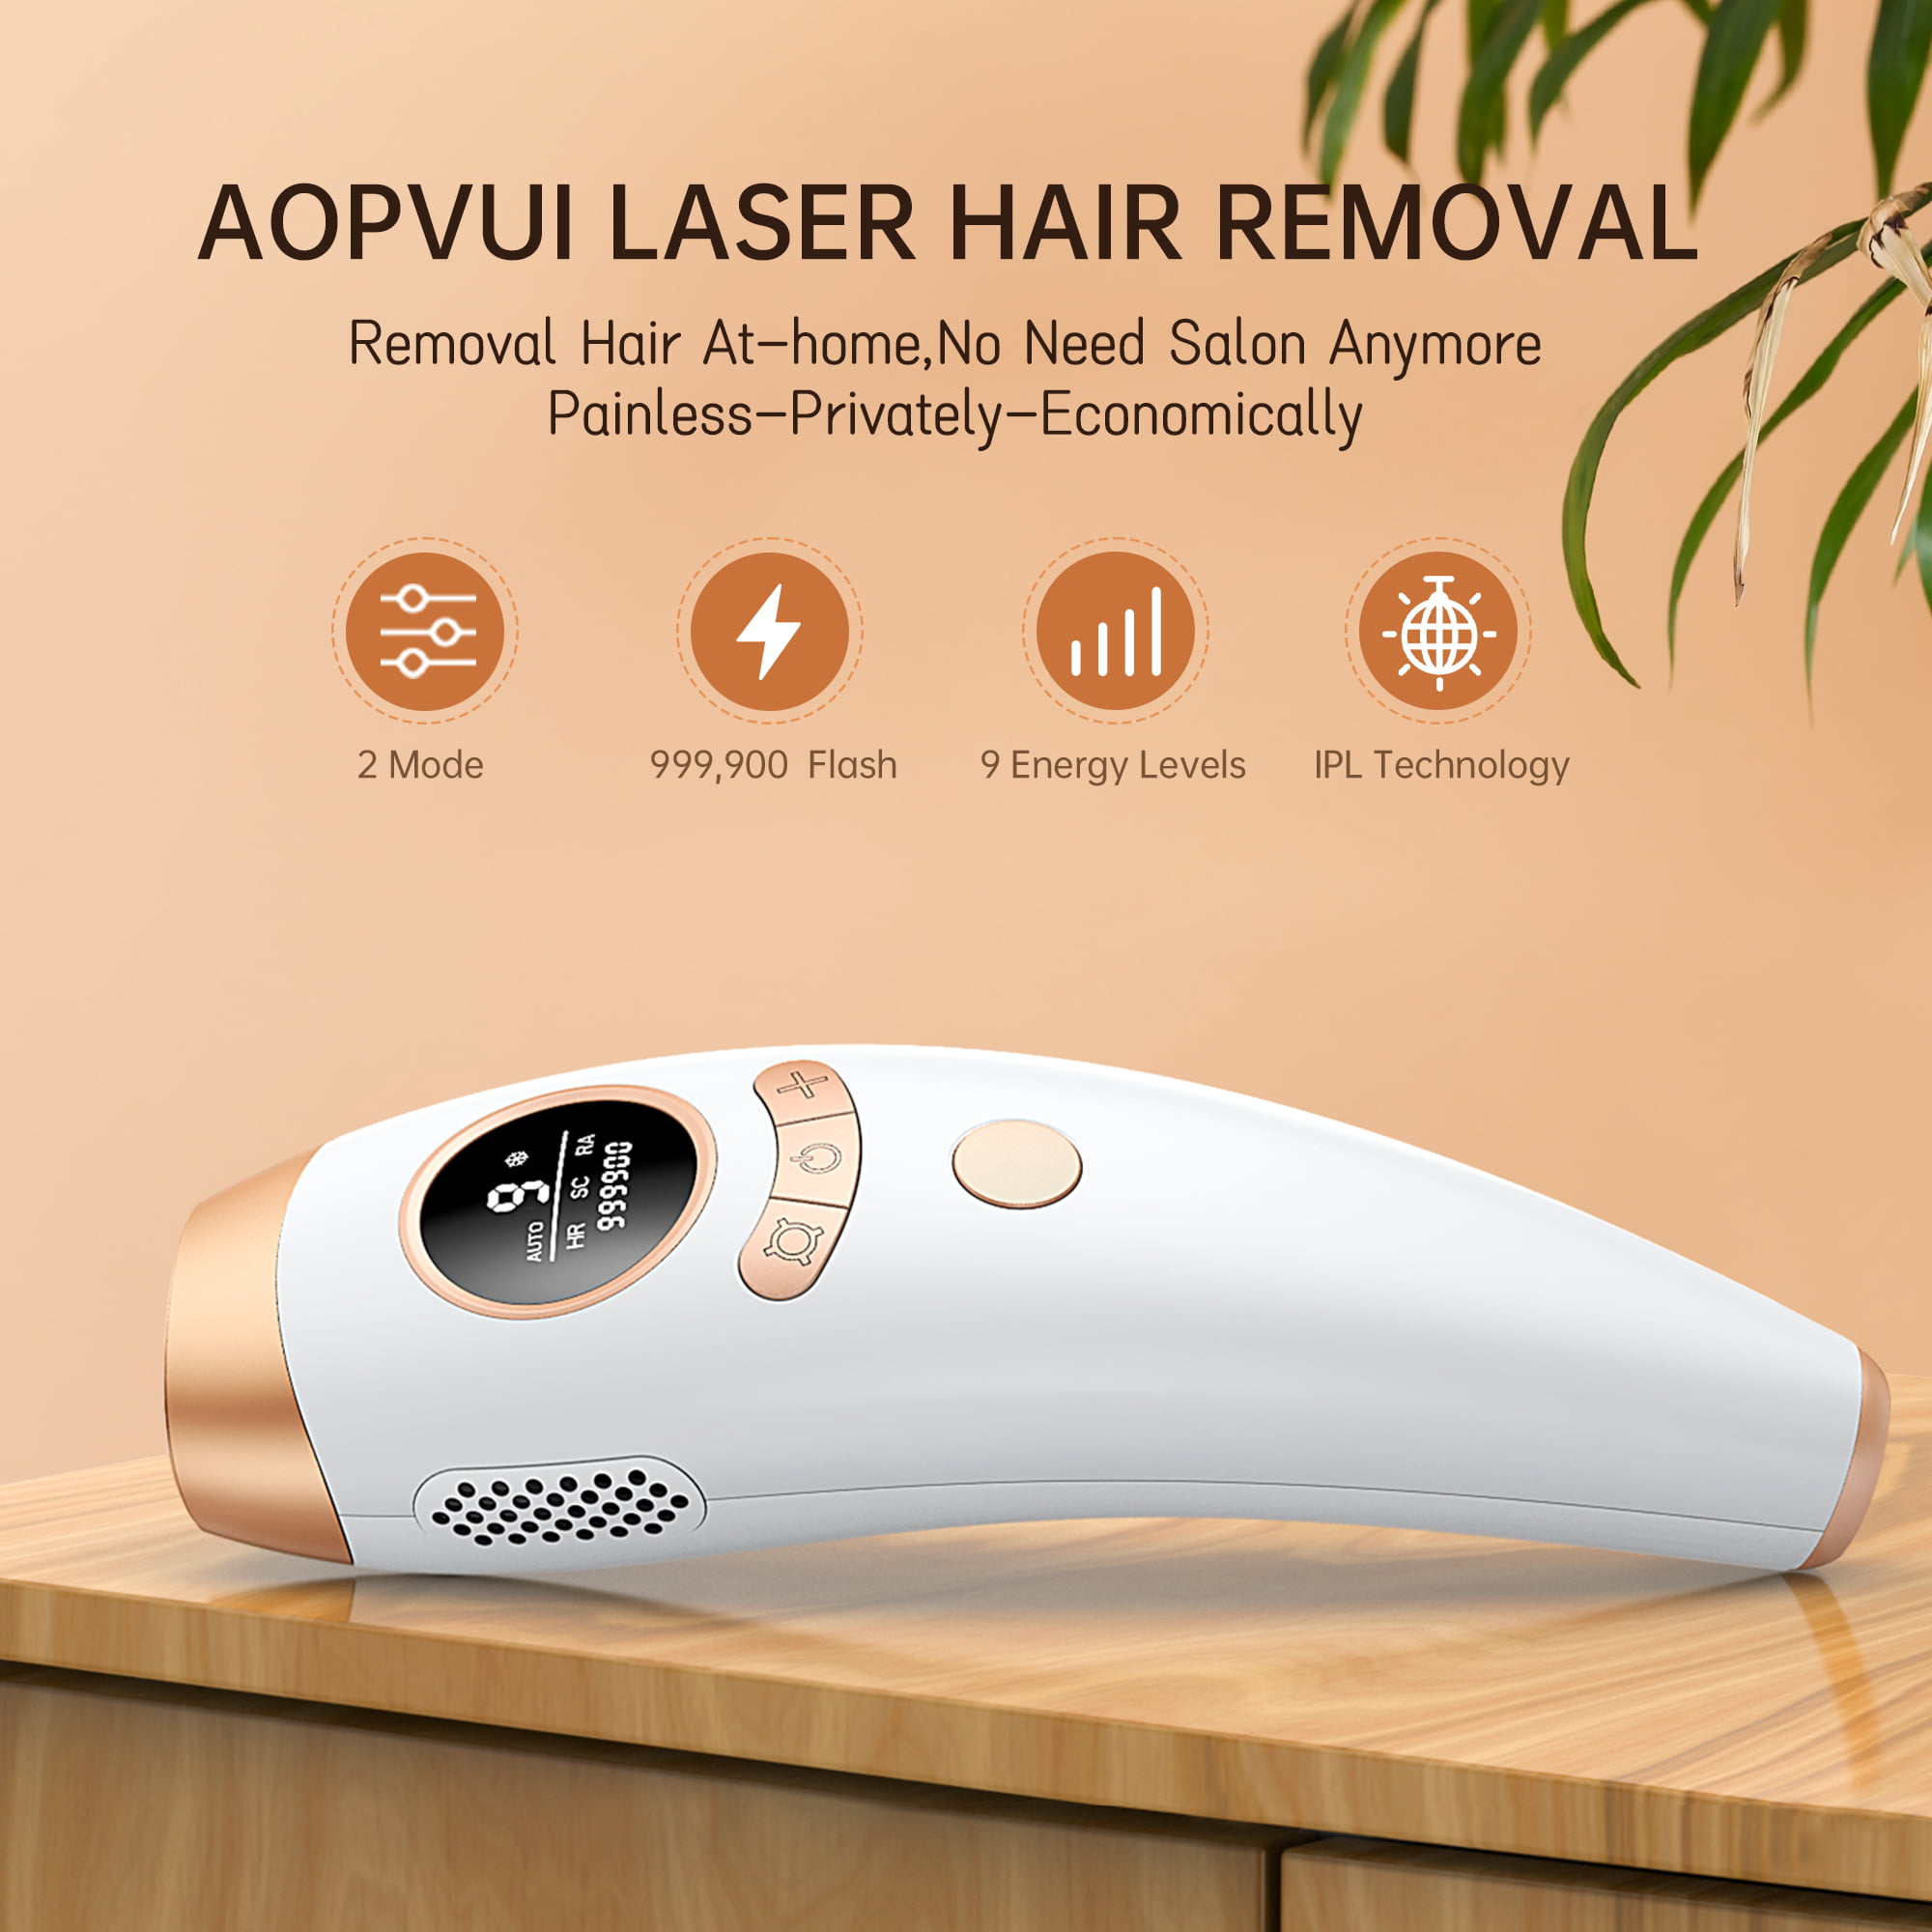 Aopvui Laser Hair Removal Reviews